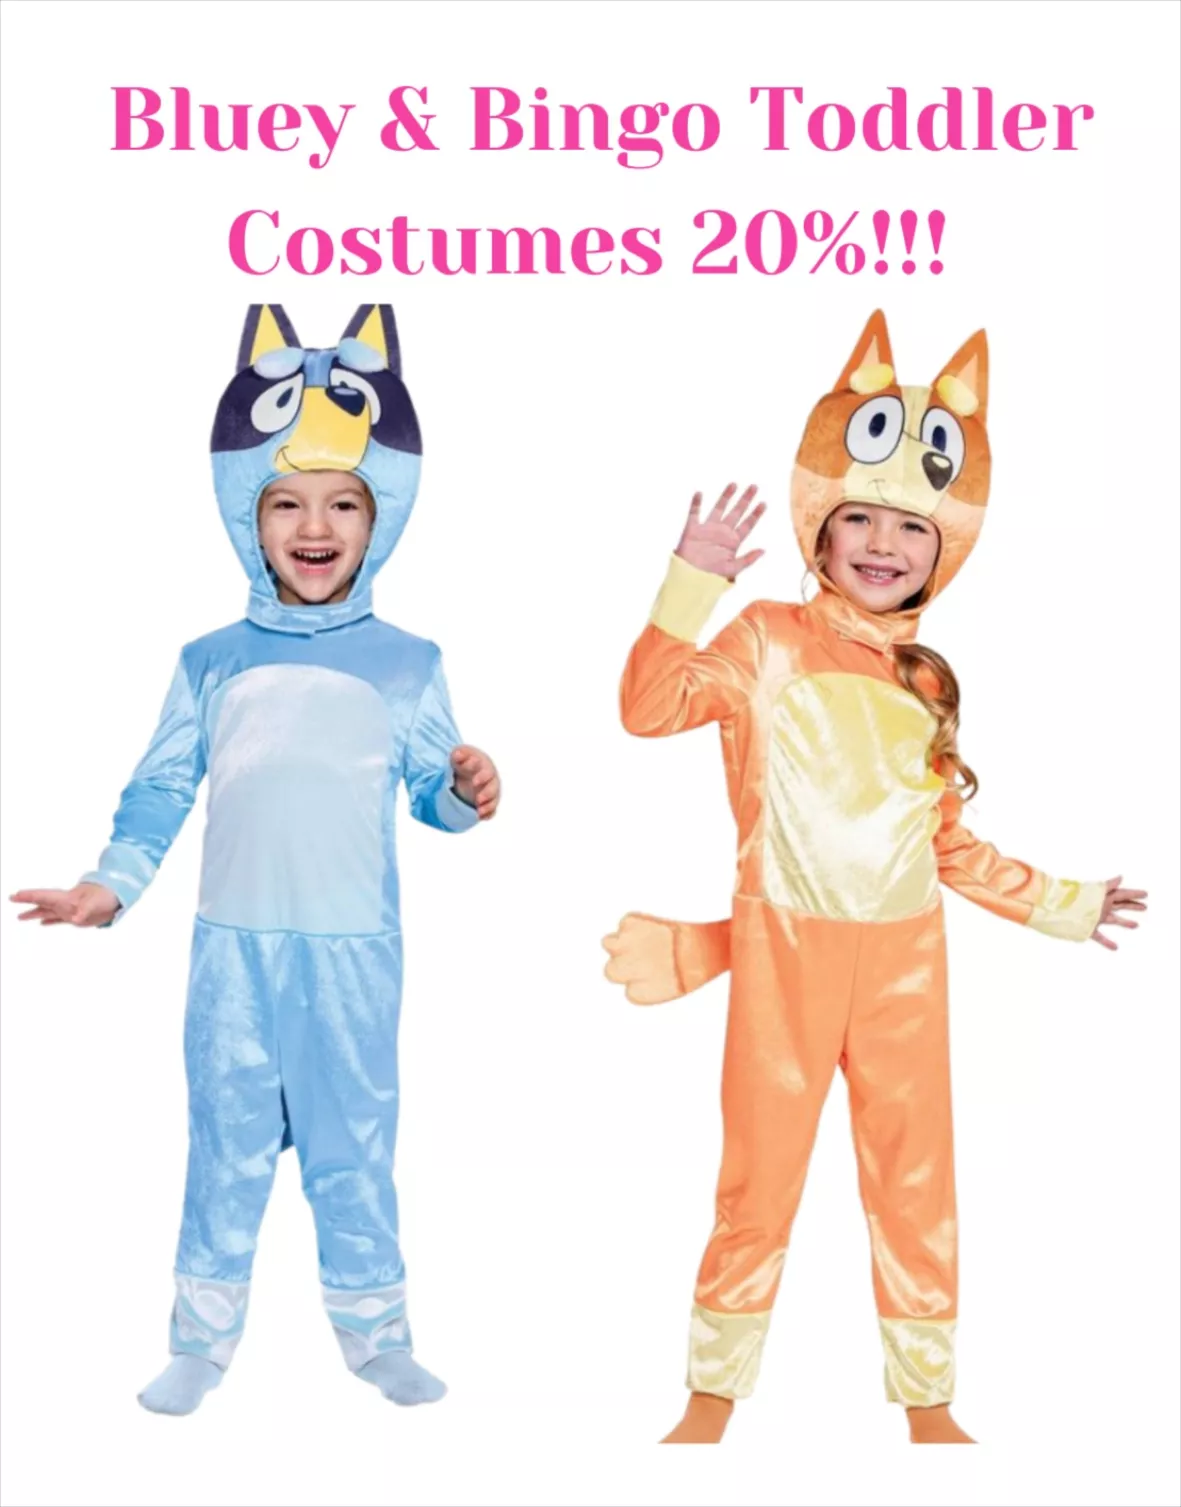 Bluey Costumes in Kids Halloween Costumes 